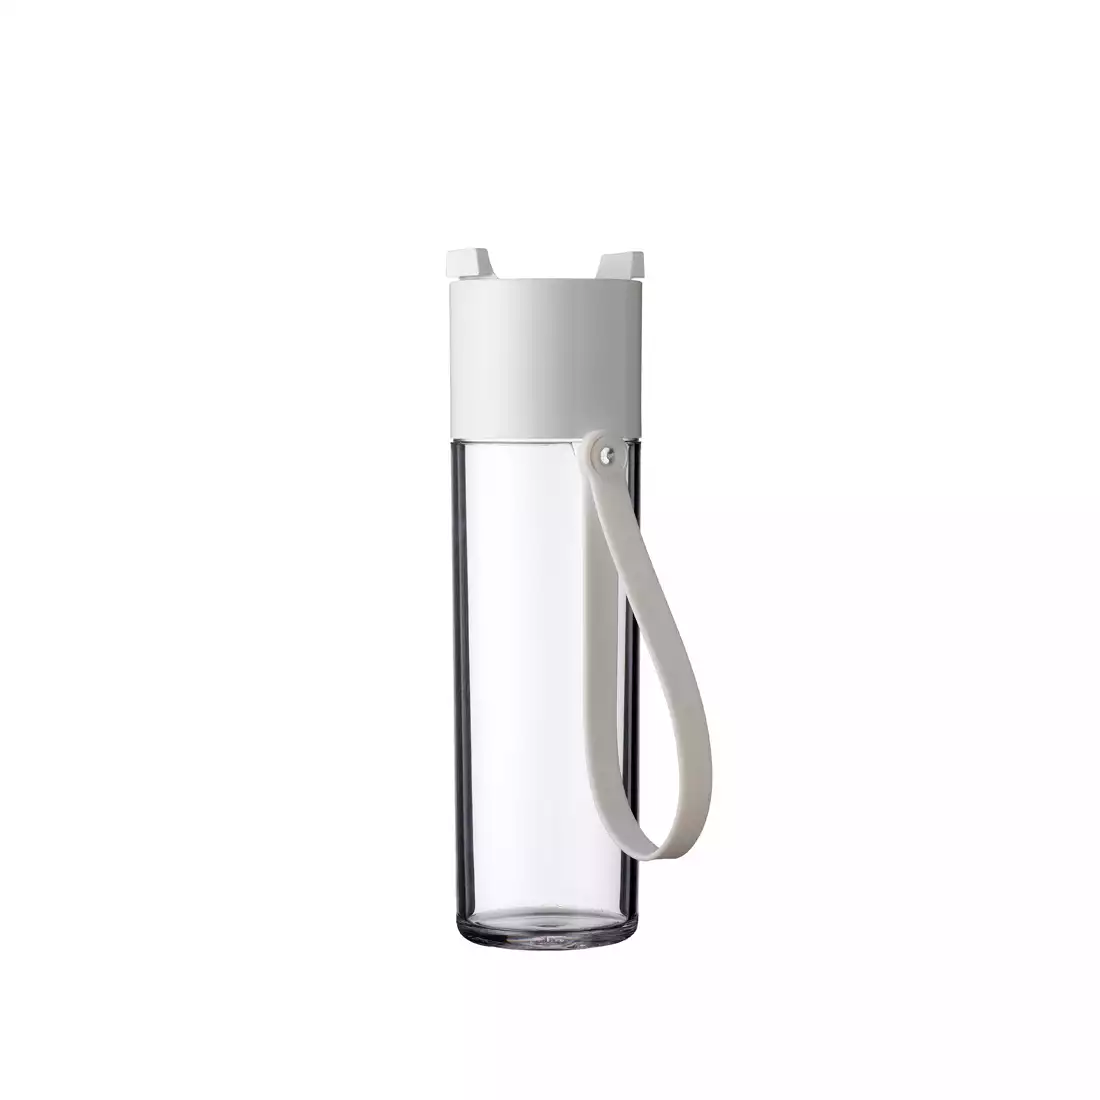 MEPAL JUSTWATER water bottle 500 ml, white